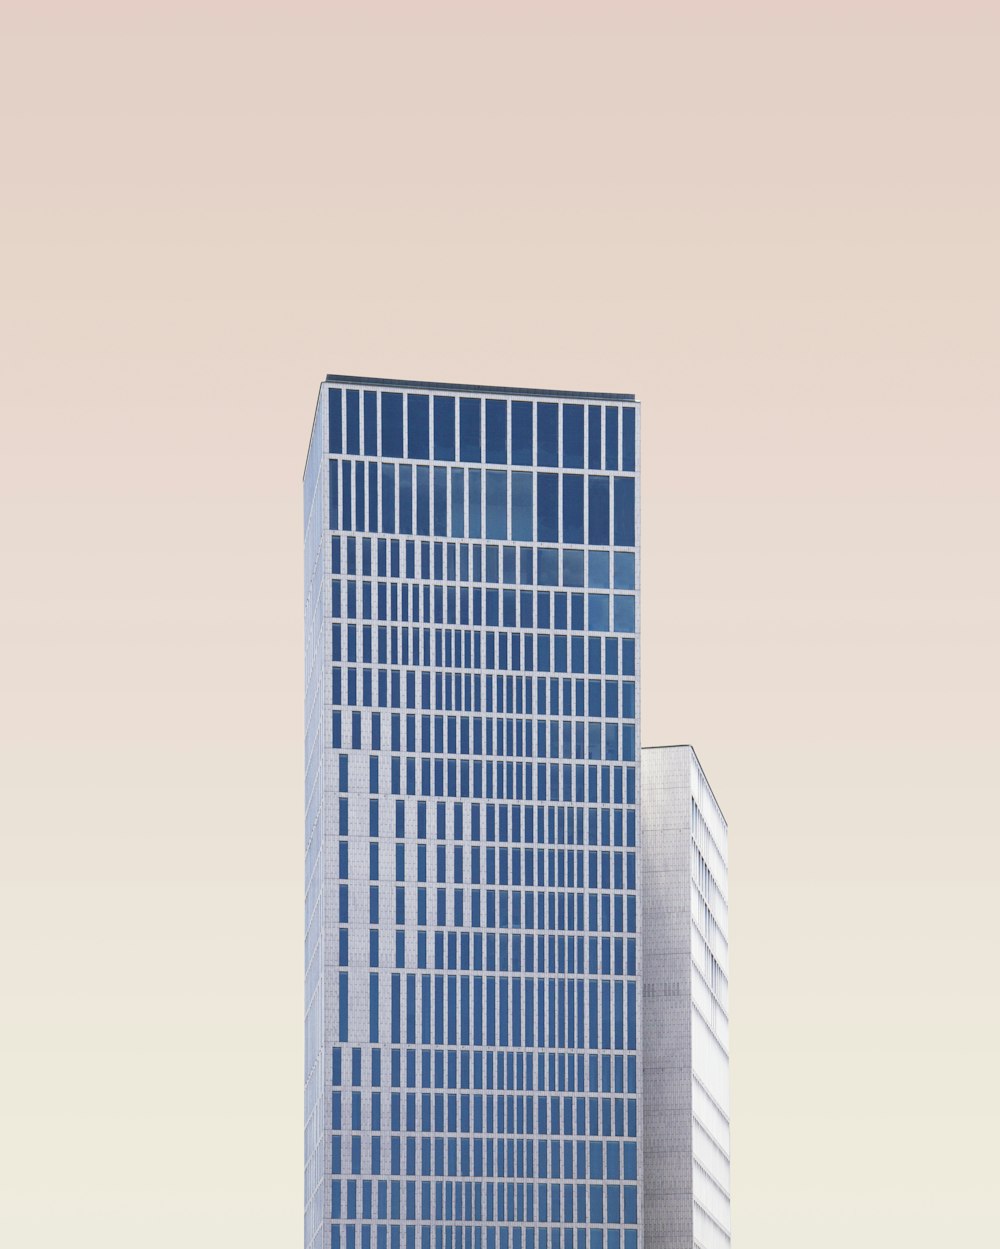 blue high rise building